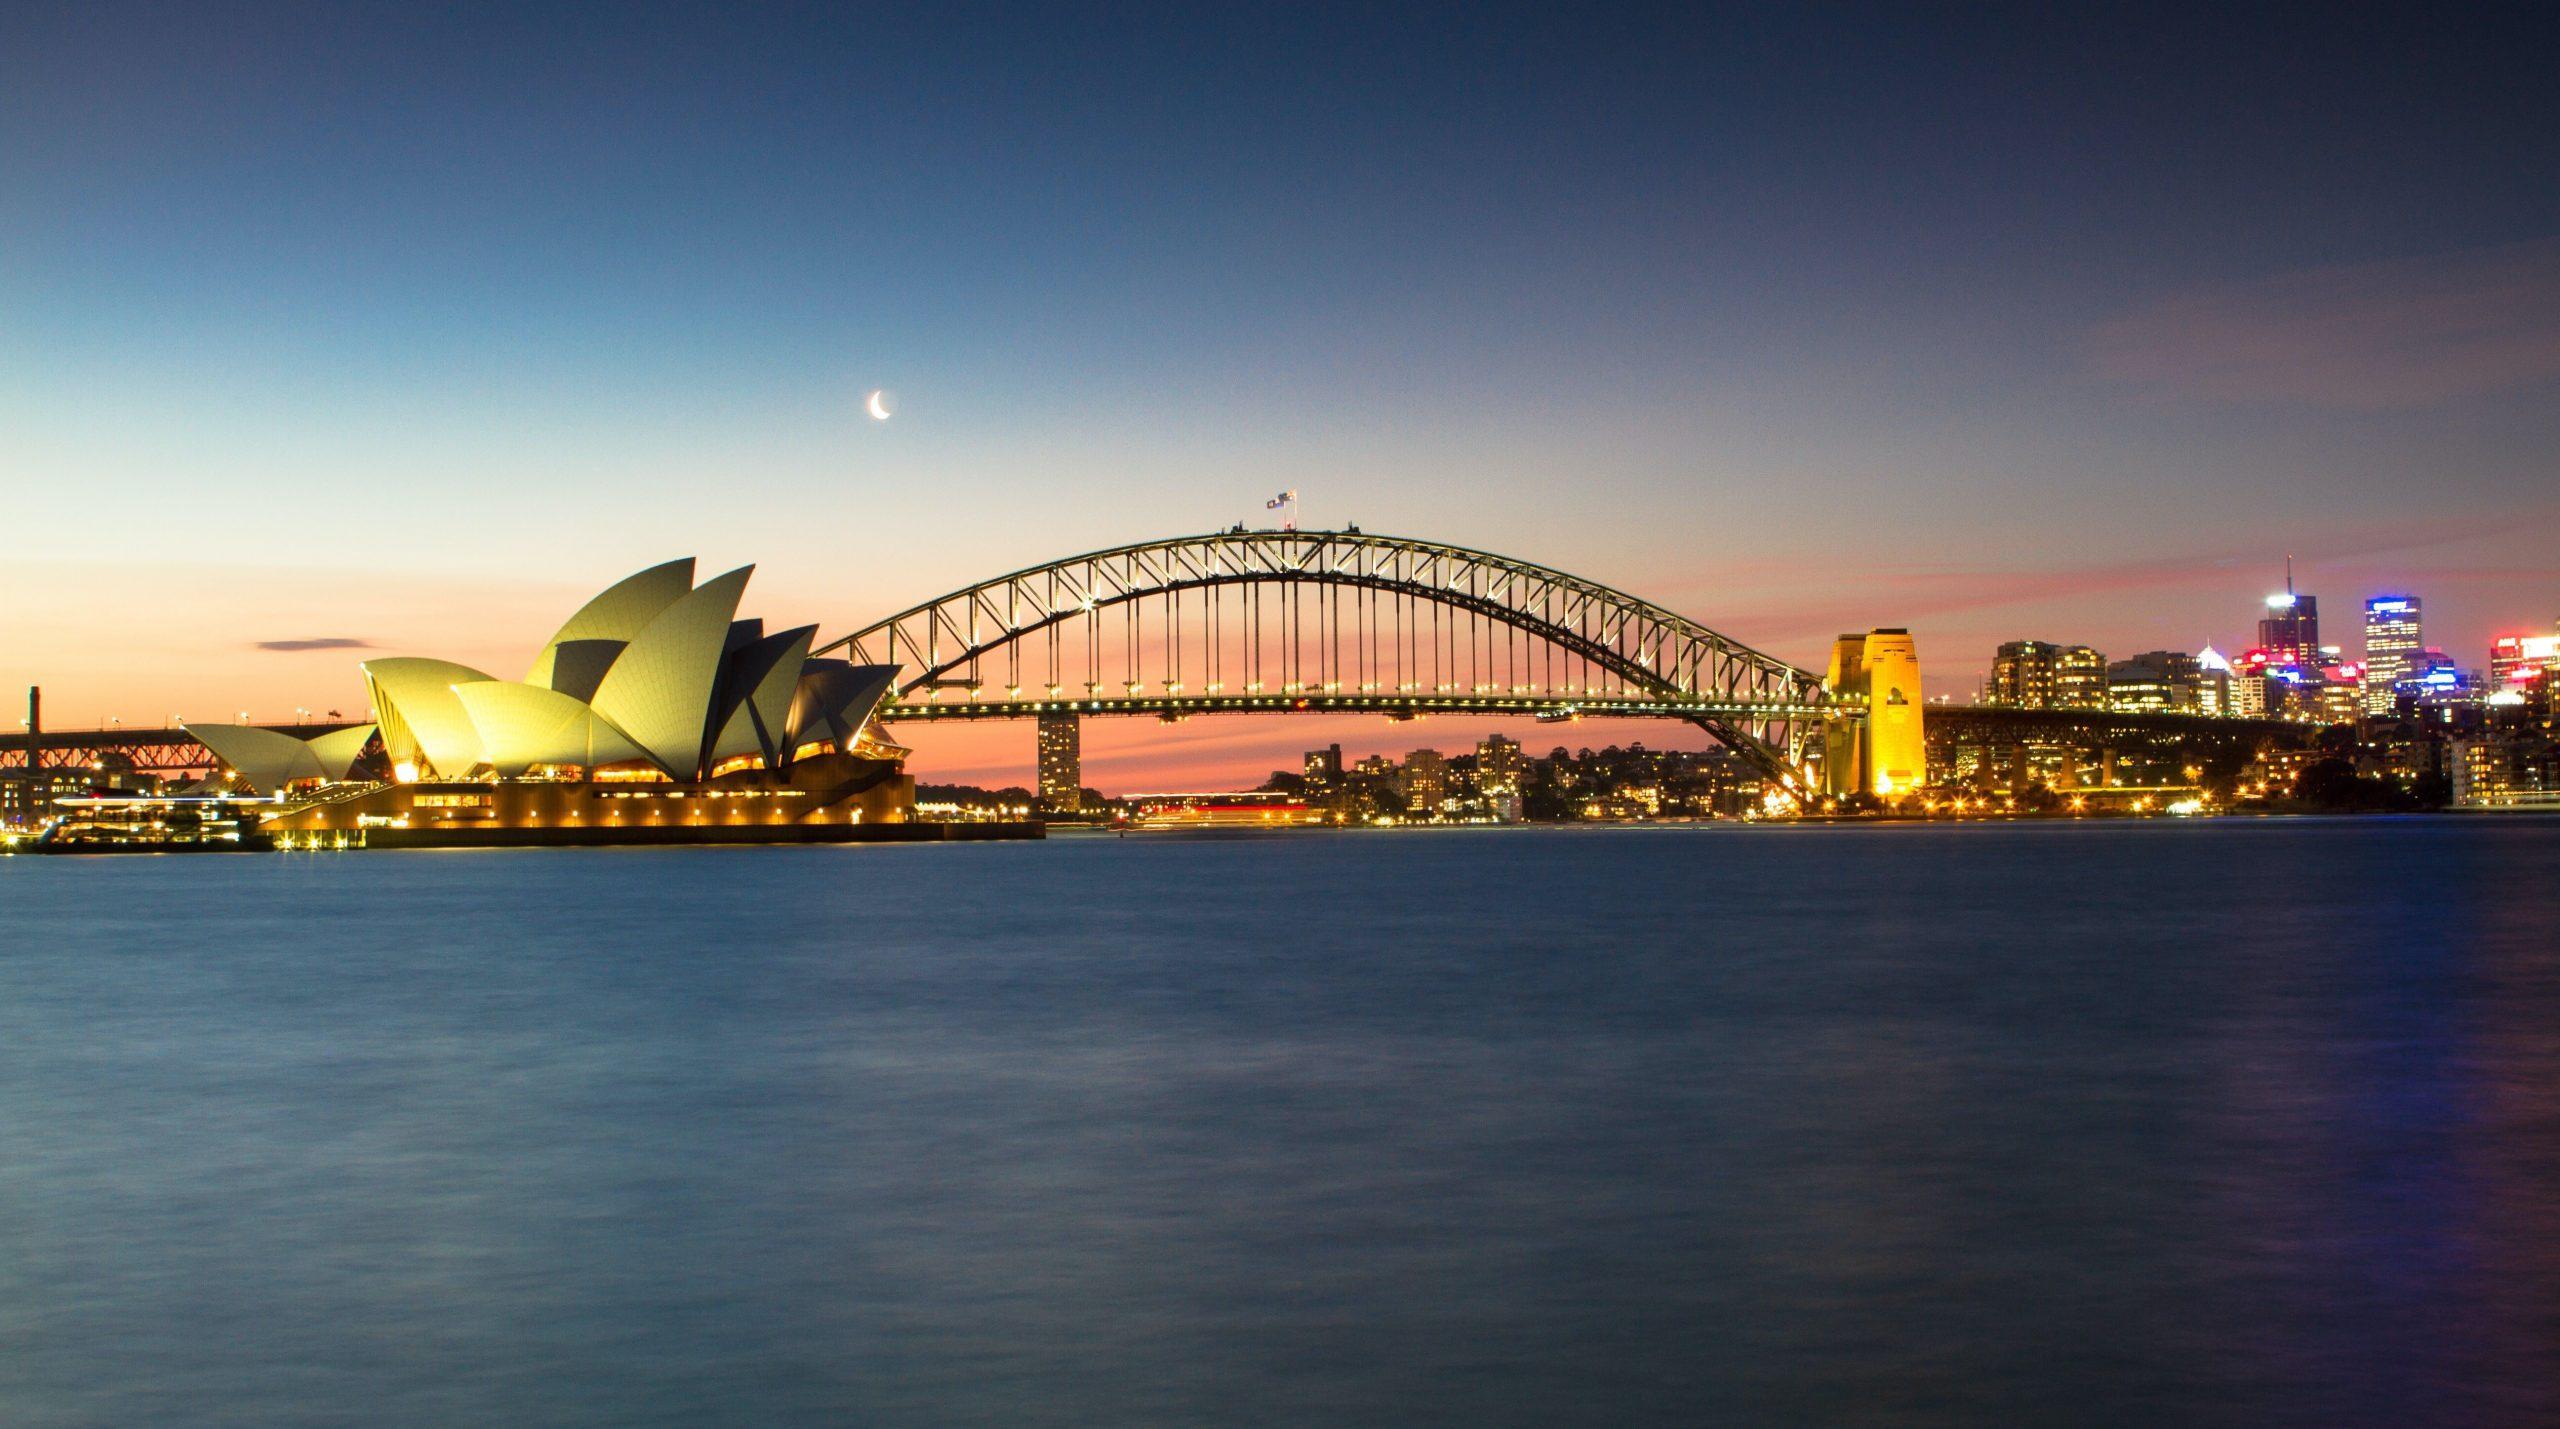 Sydney Opera House and the Sydney Harbour Bridge at sunset.